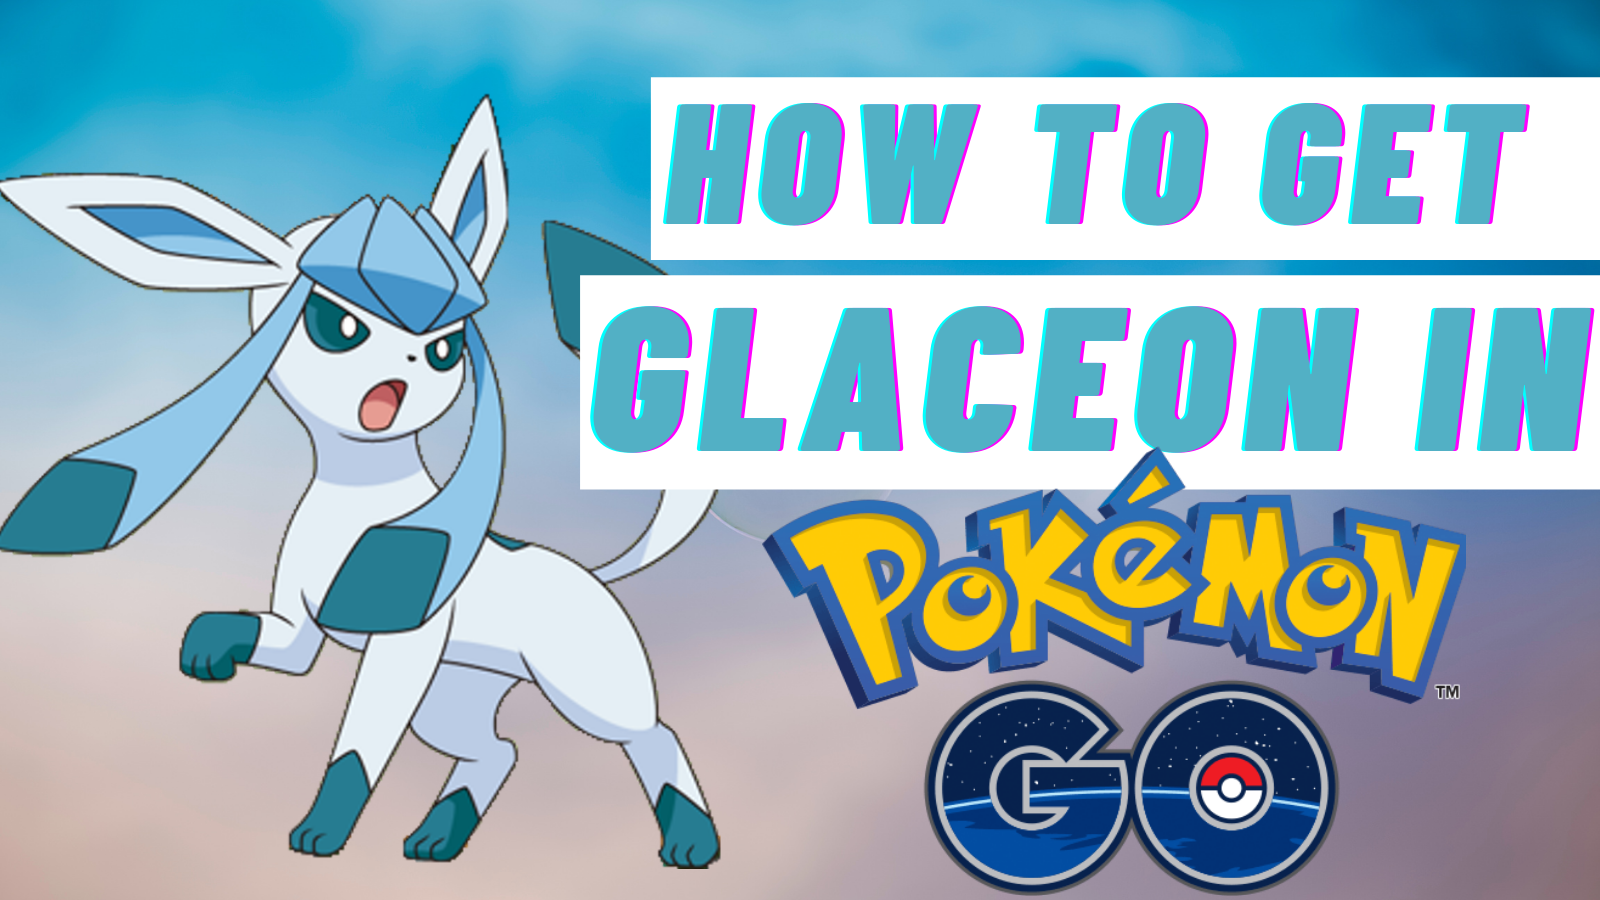 Pokemon GO: How to evolve Eevee into Glaceon